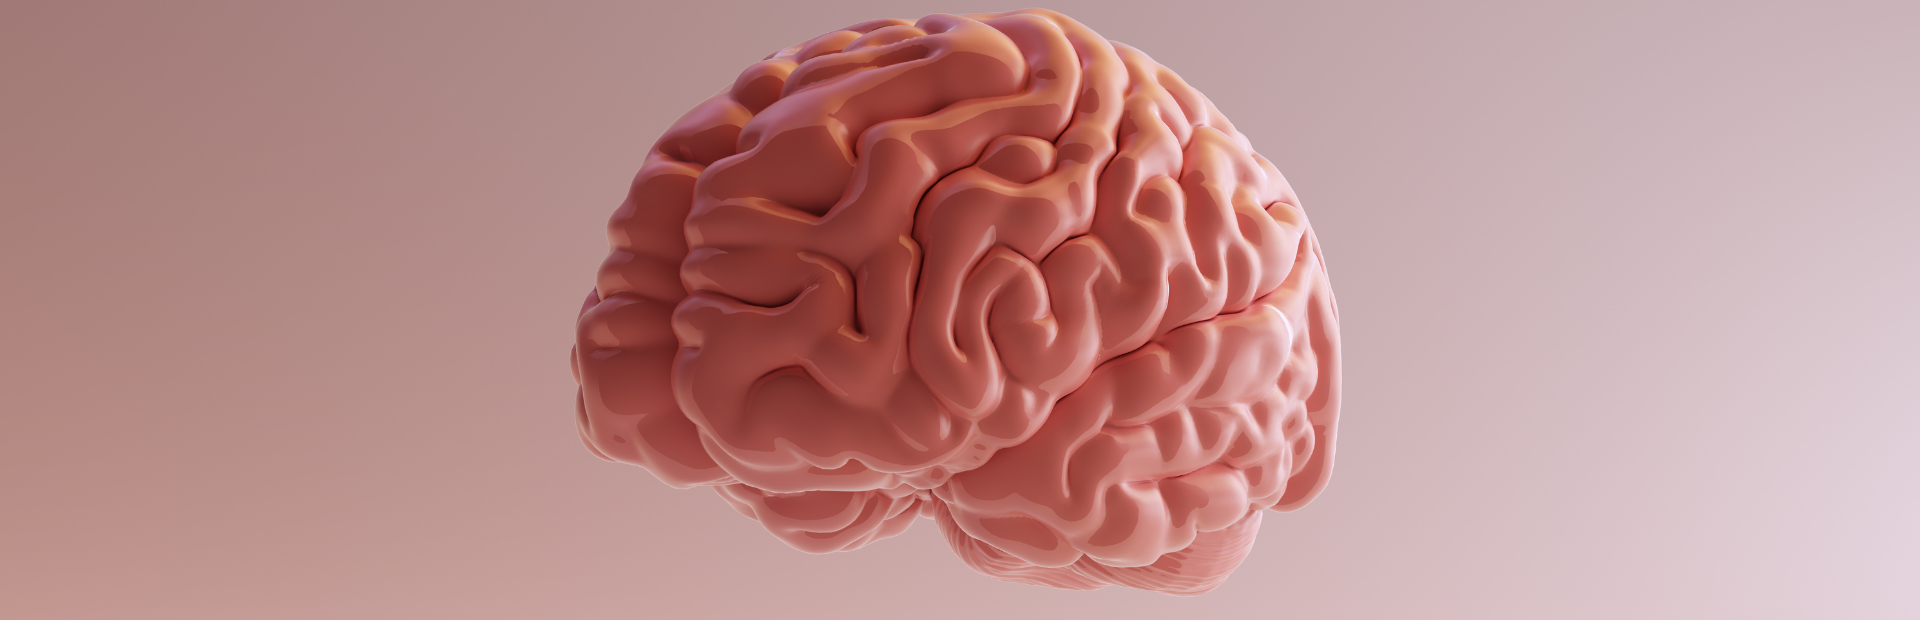 Imagem ilustrativa do cérebro humano